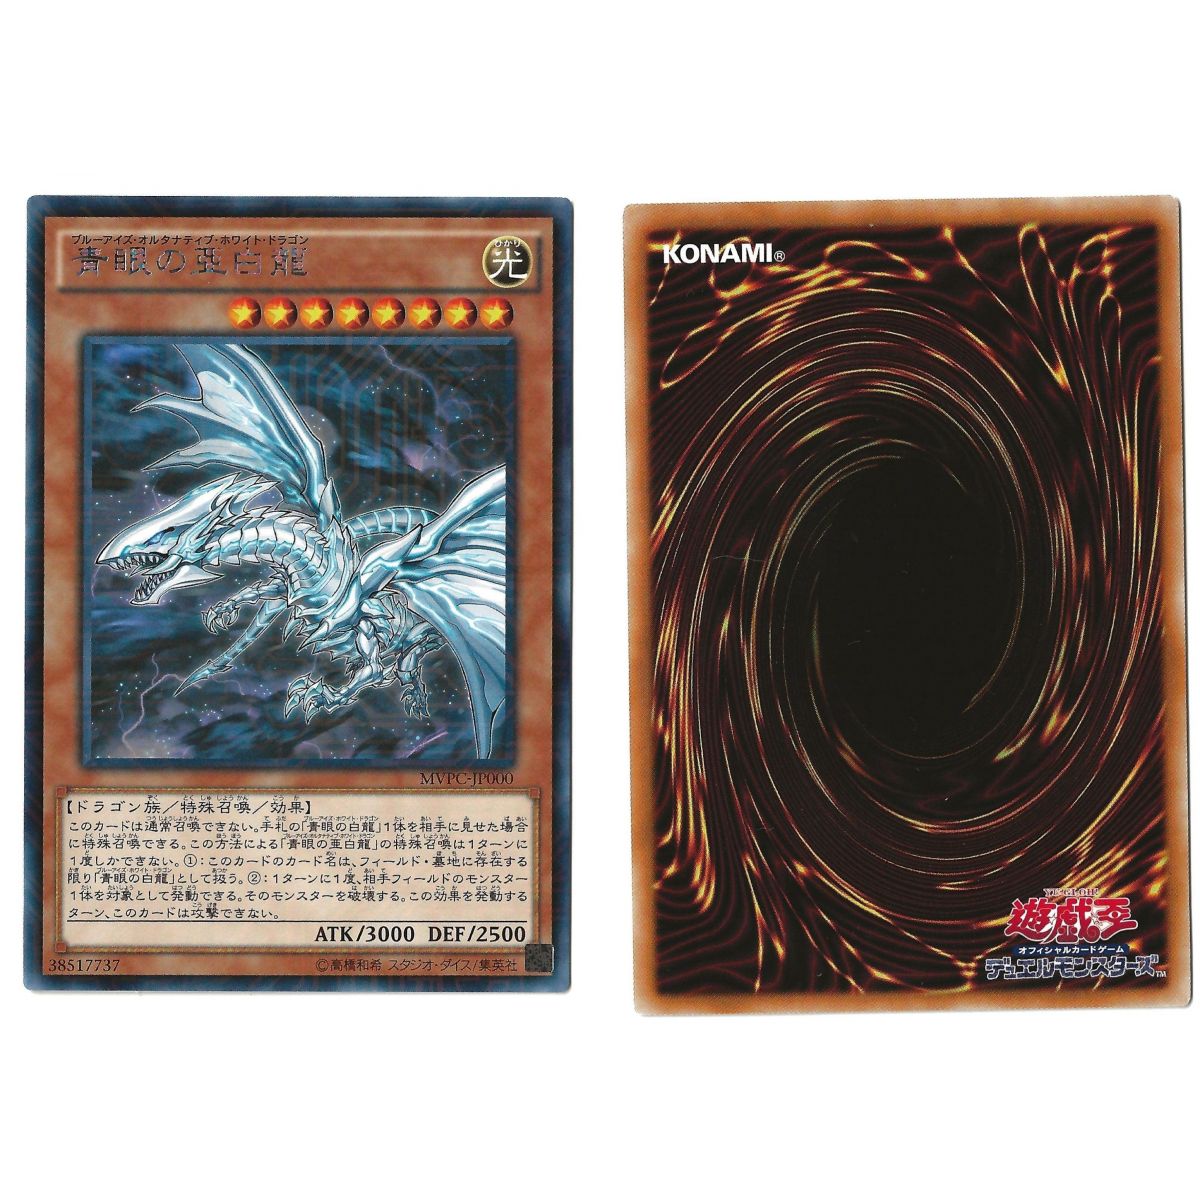 Blue-Eyes Alternative White Dragon (2) MVPC-JP000 Yu-Gi-Oh! The Dark Dimensions Advance Ticket Promotional Cards Kaiba Corp Rare